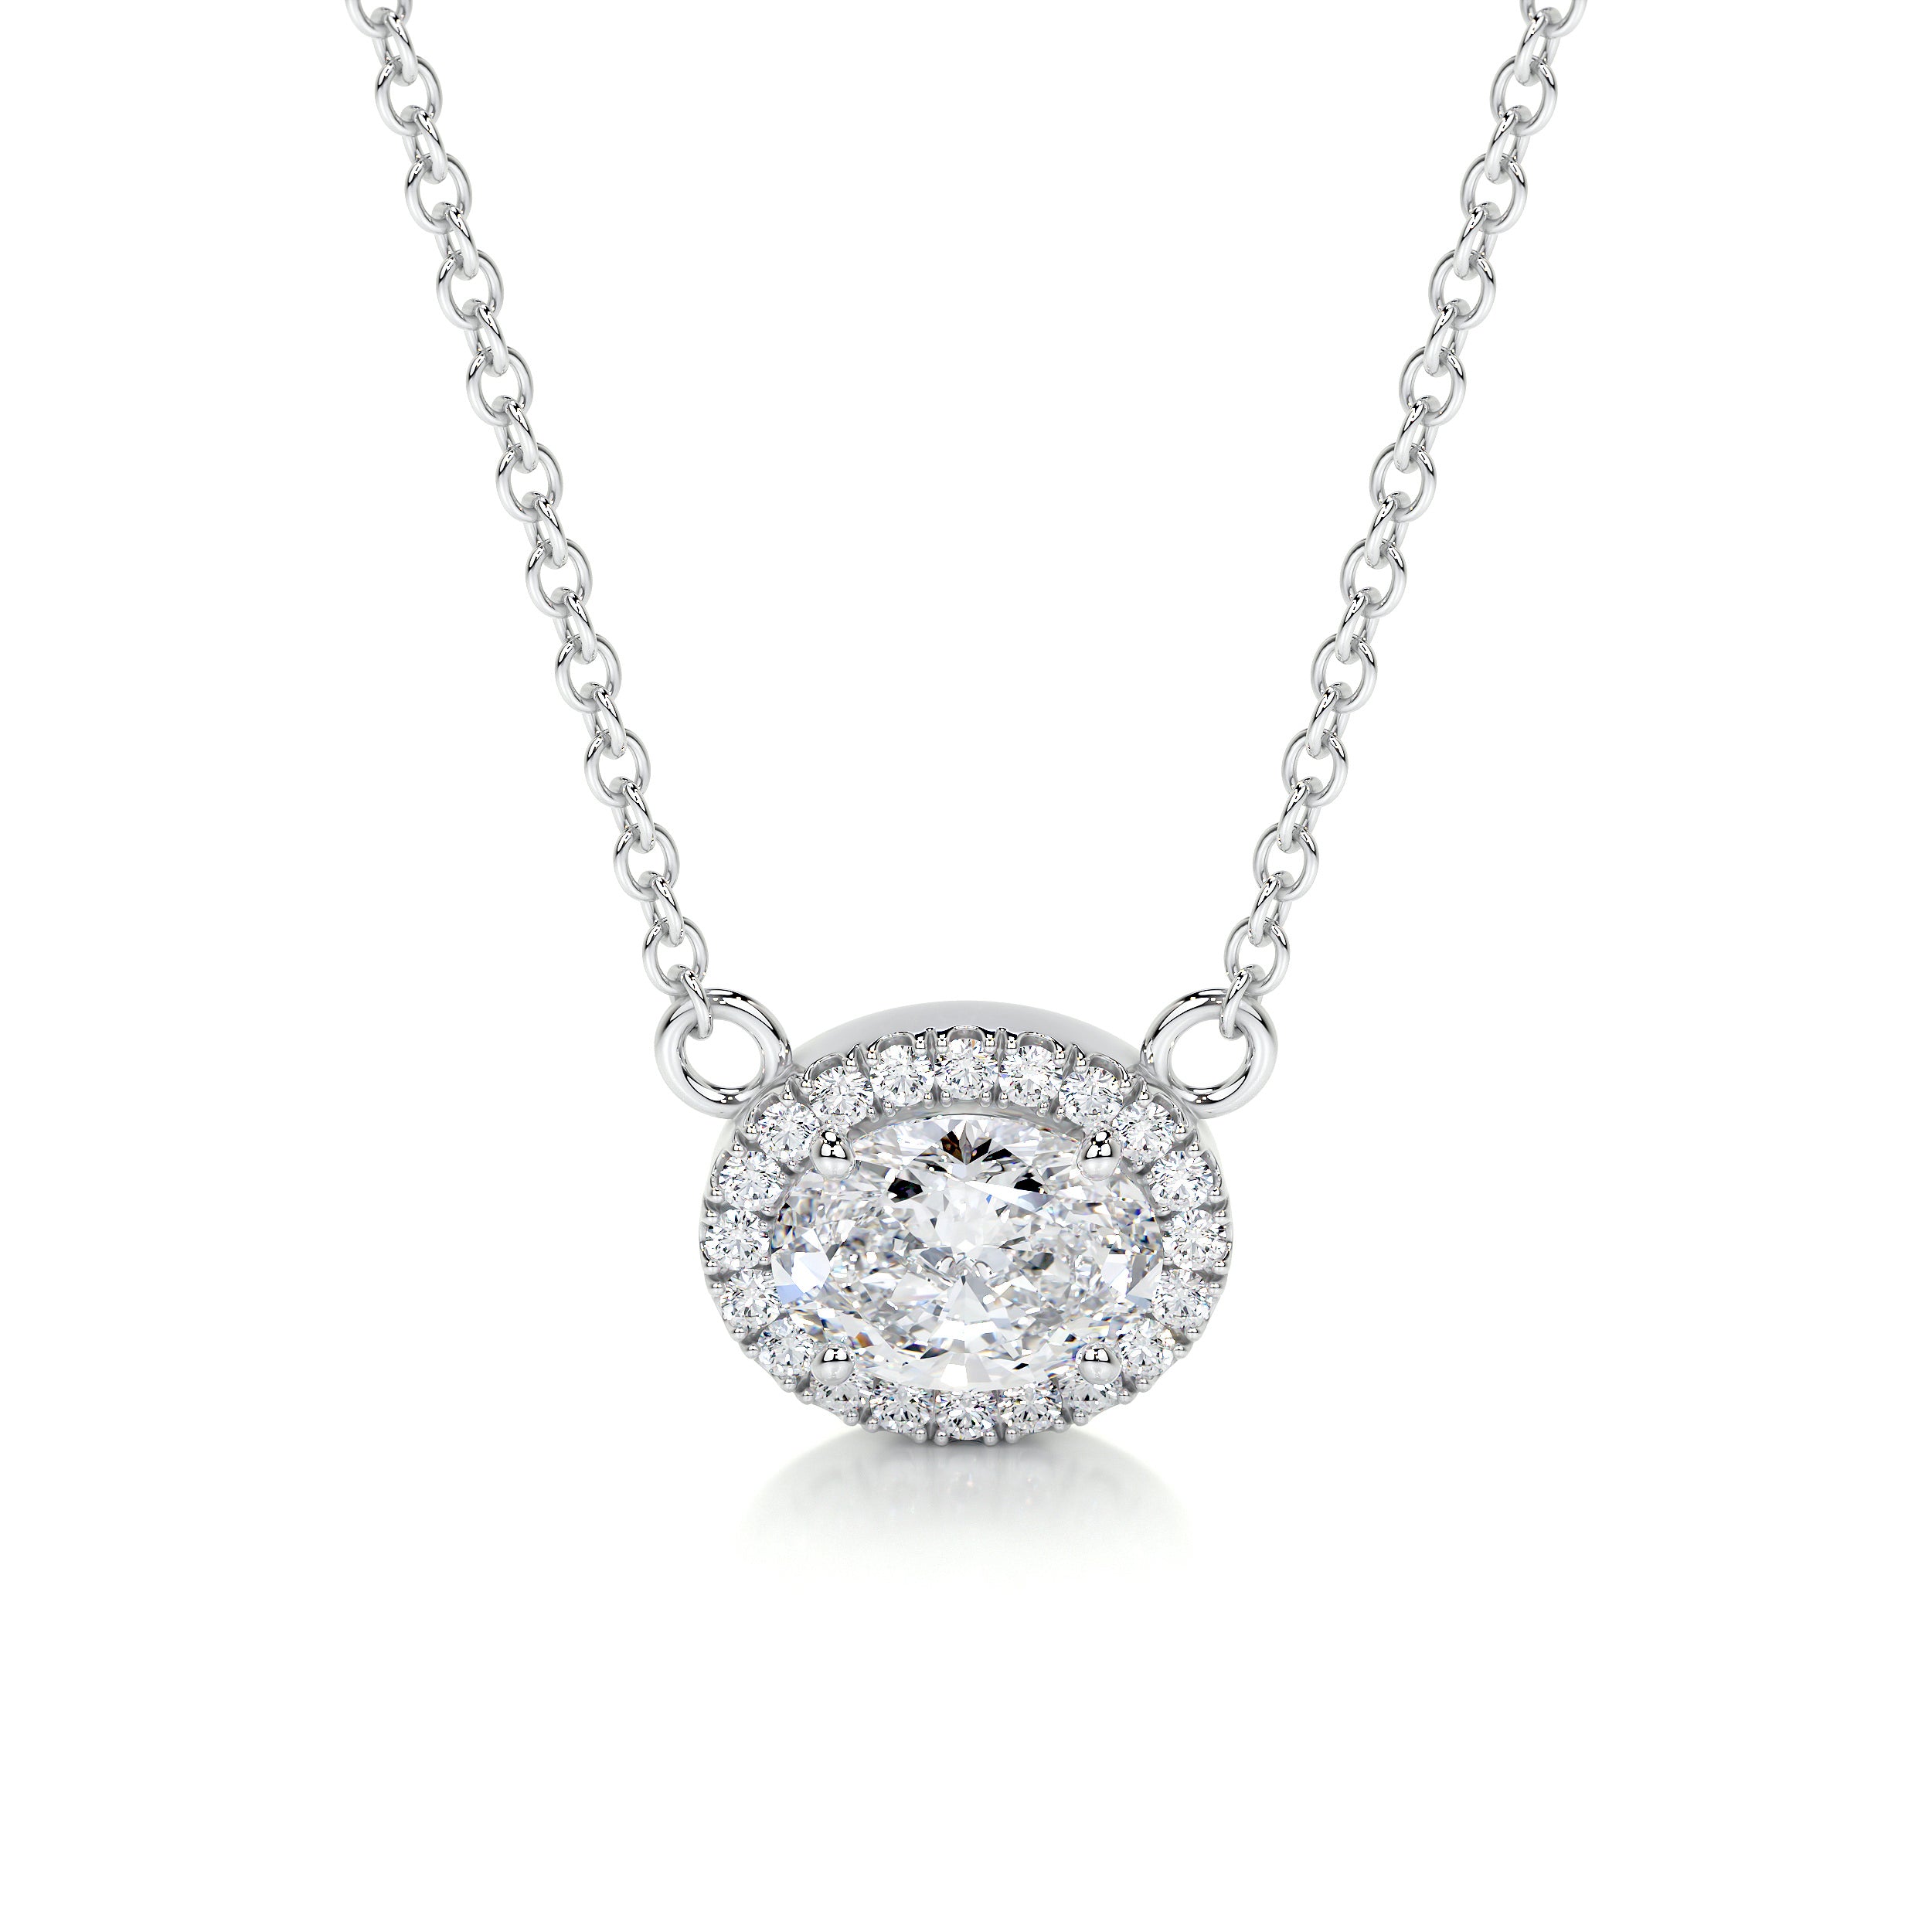 Louise Diamonds Pendant   (1.2 Carat) -18K White Gold